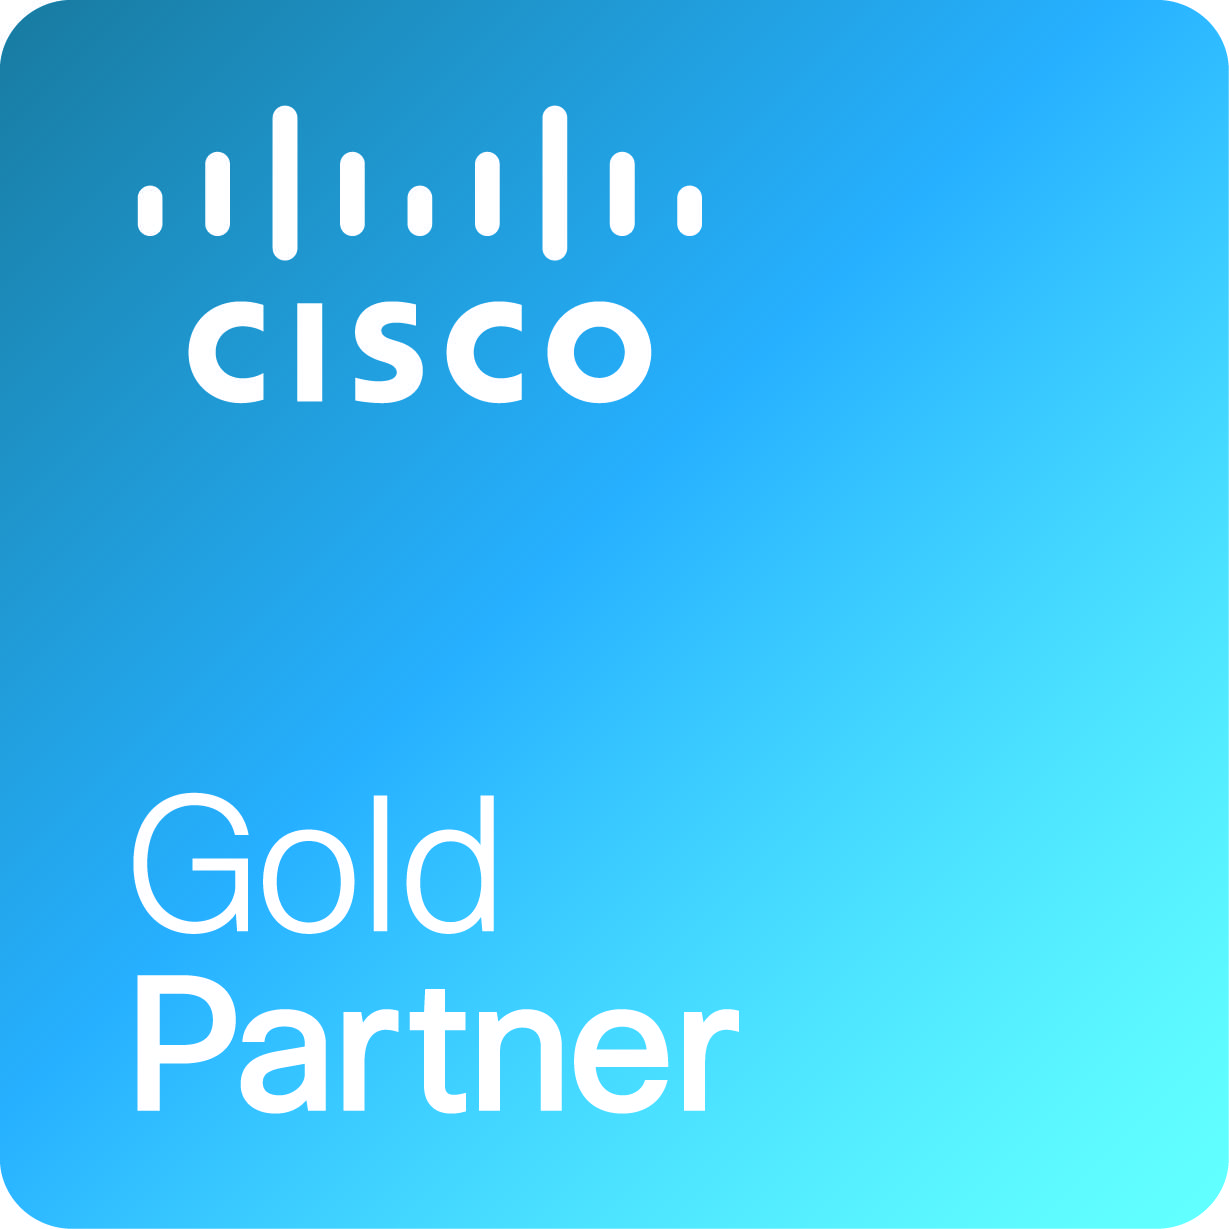 cisco gold partner in mumbai